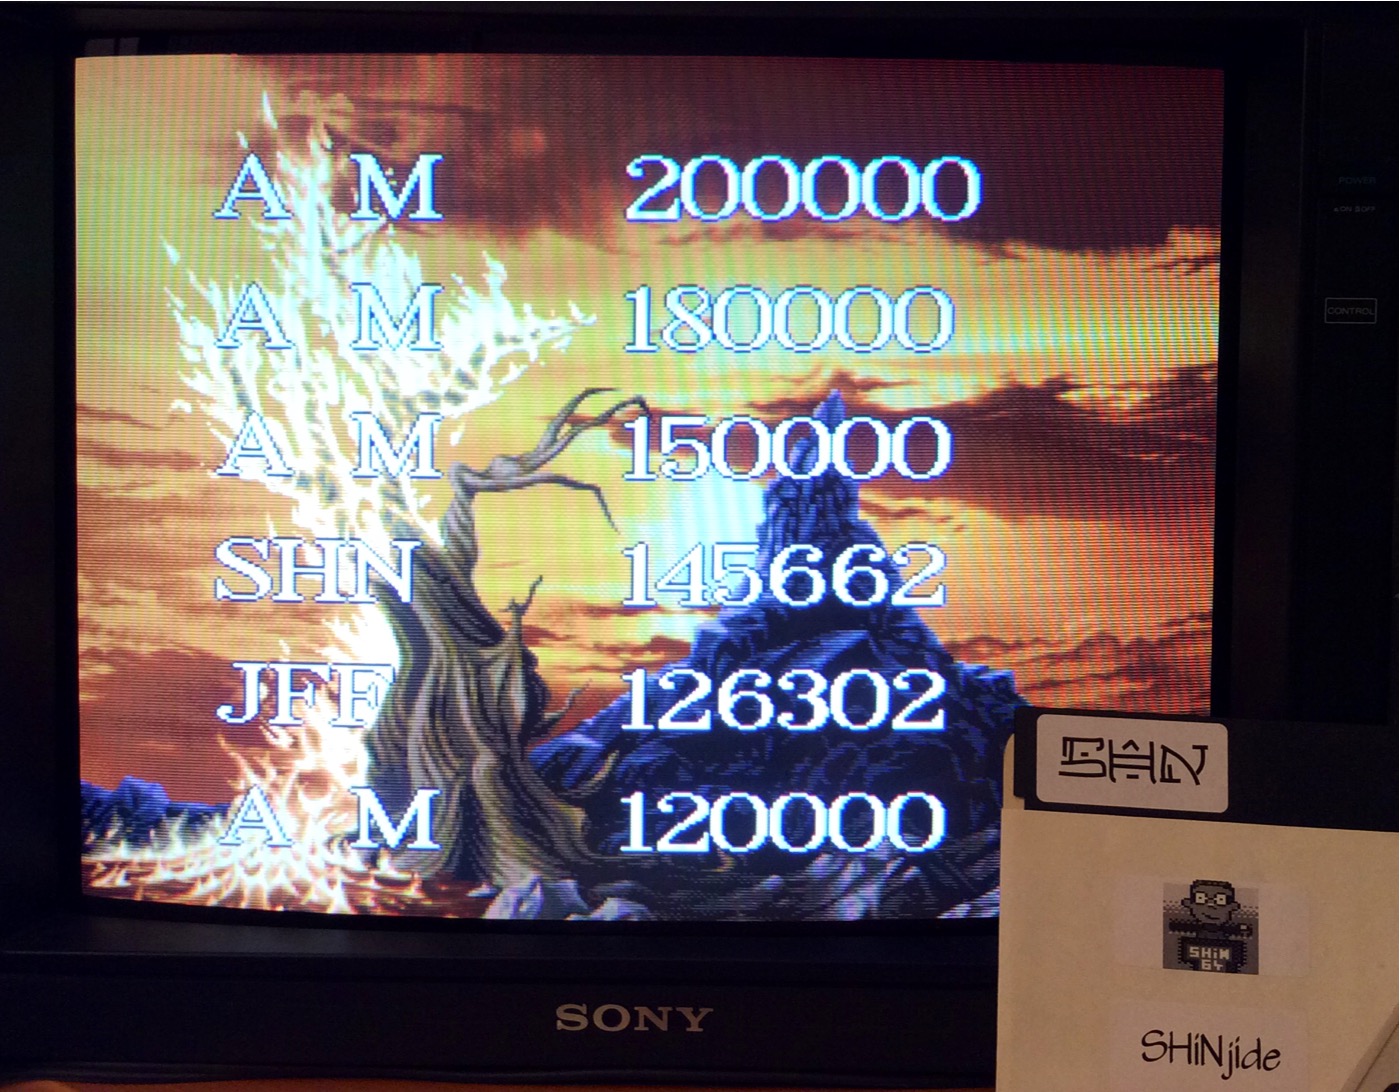 SHiNjide: Agony (Amiga) 145,662 points on 2014-09-22 16:47:45